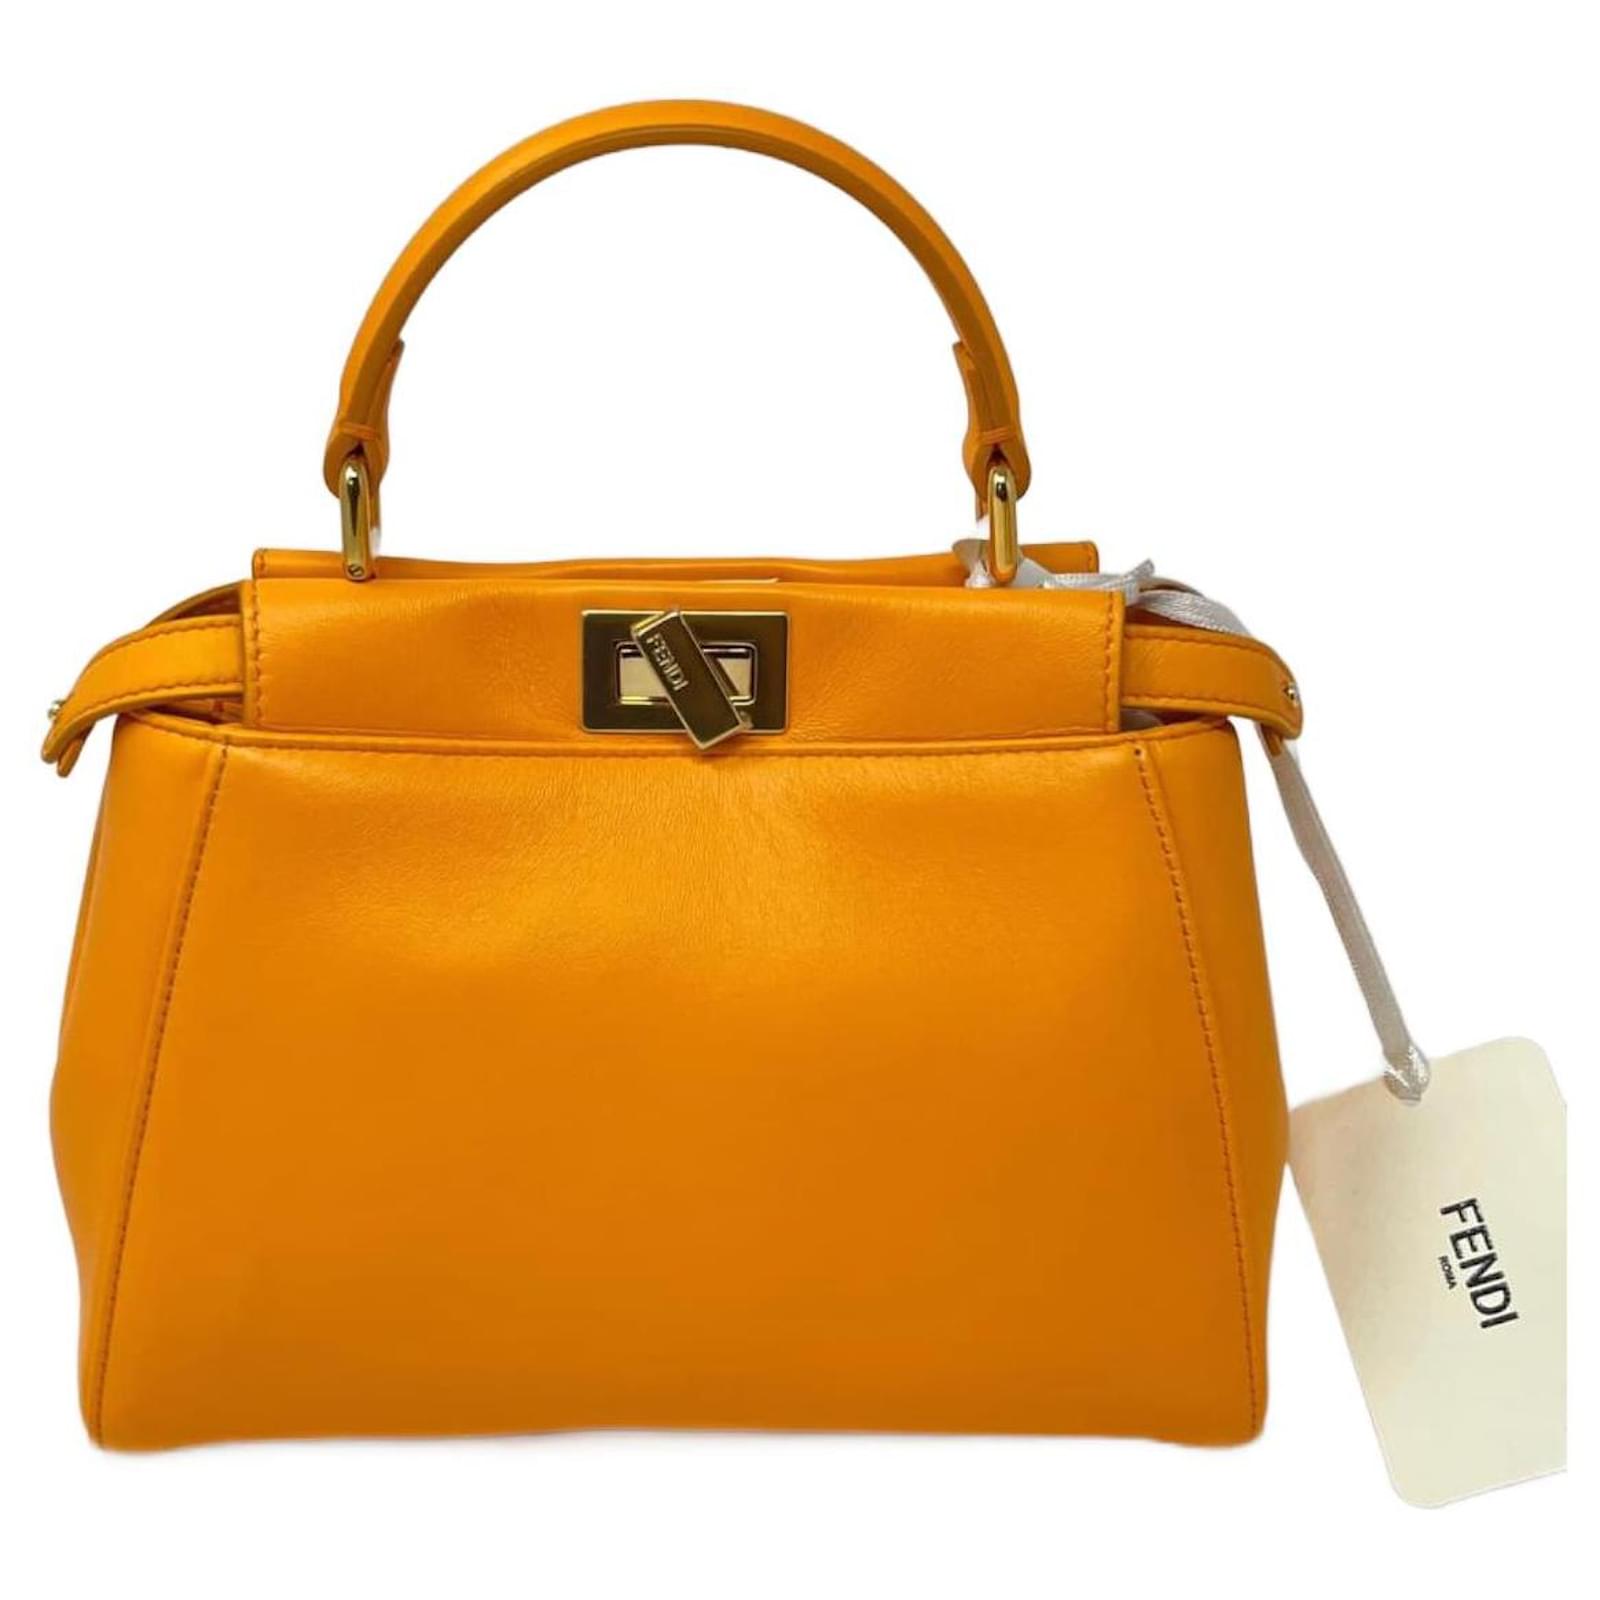 Handbags Fendi Fendi Iconic Peekaboo Mini Bag